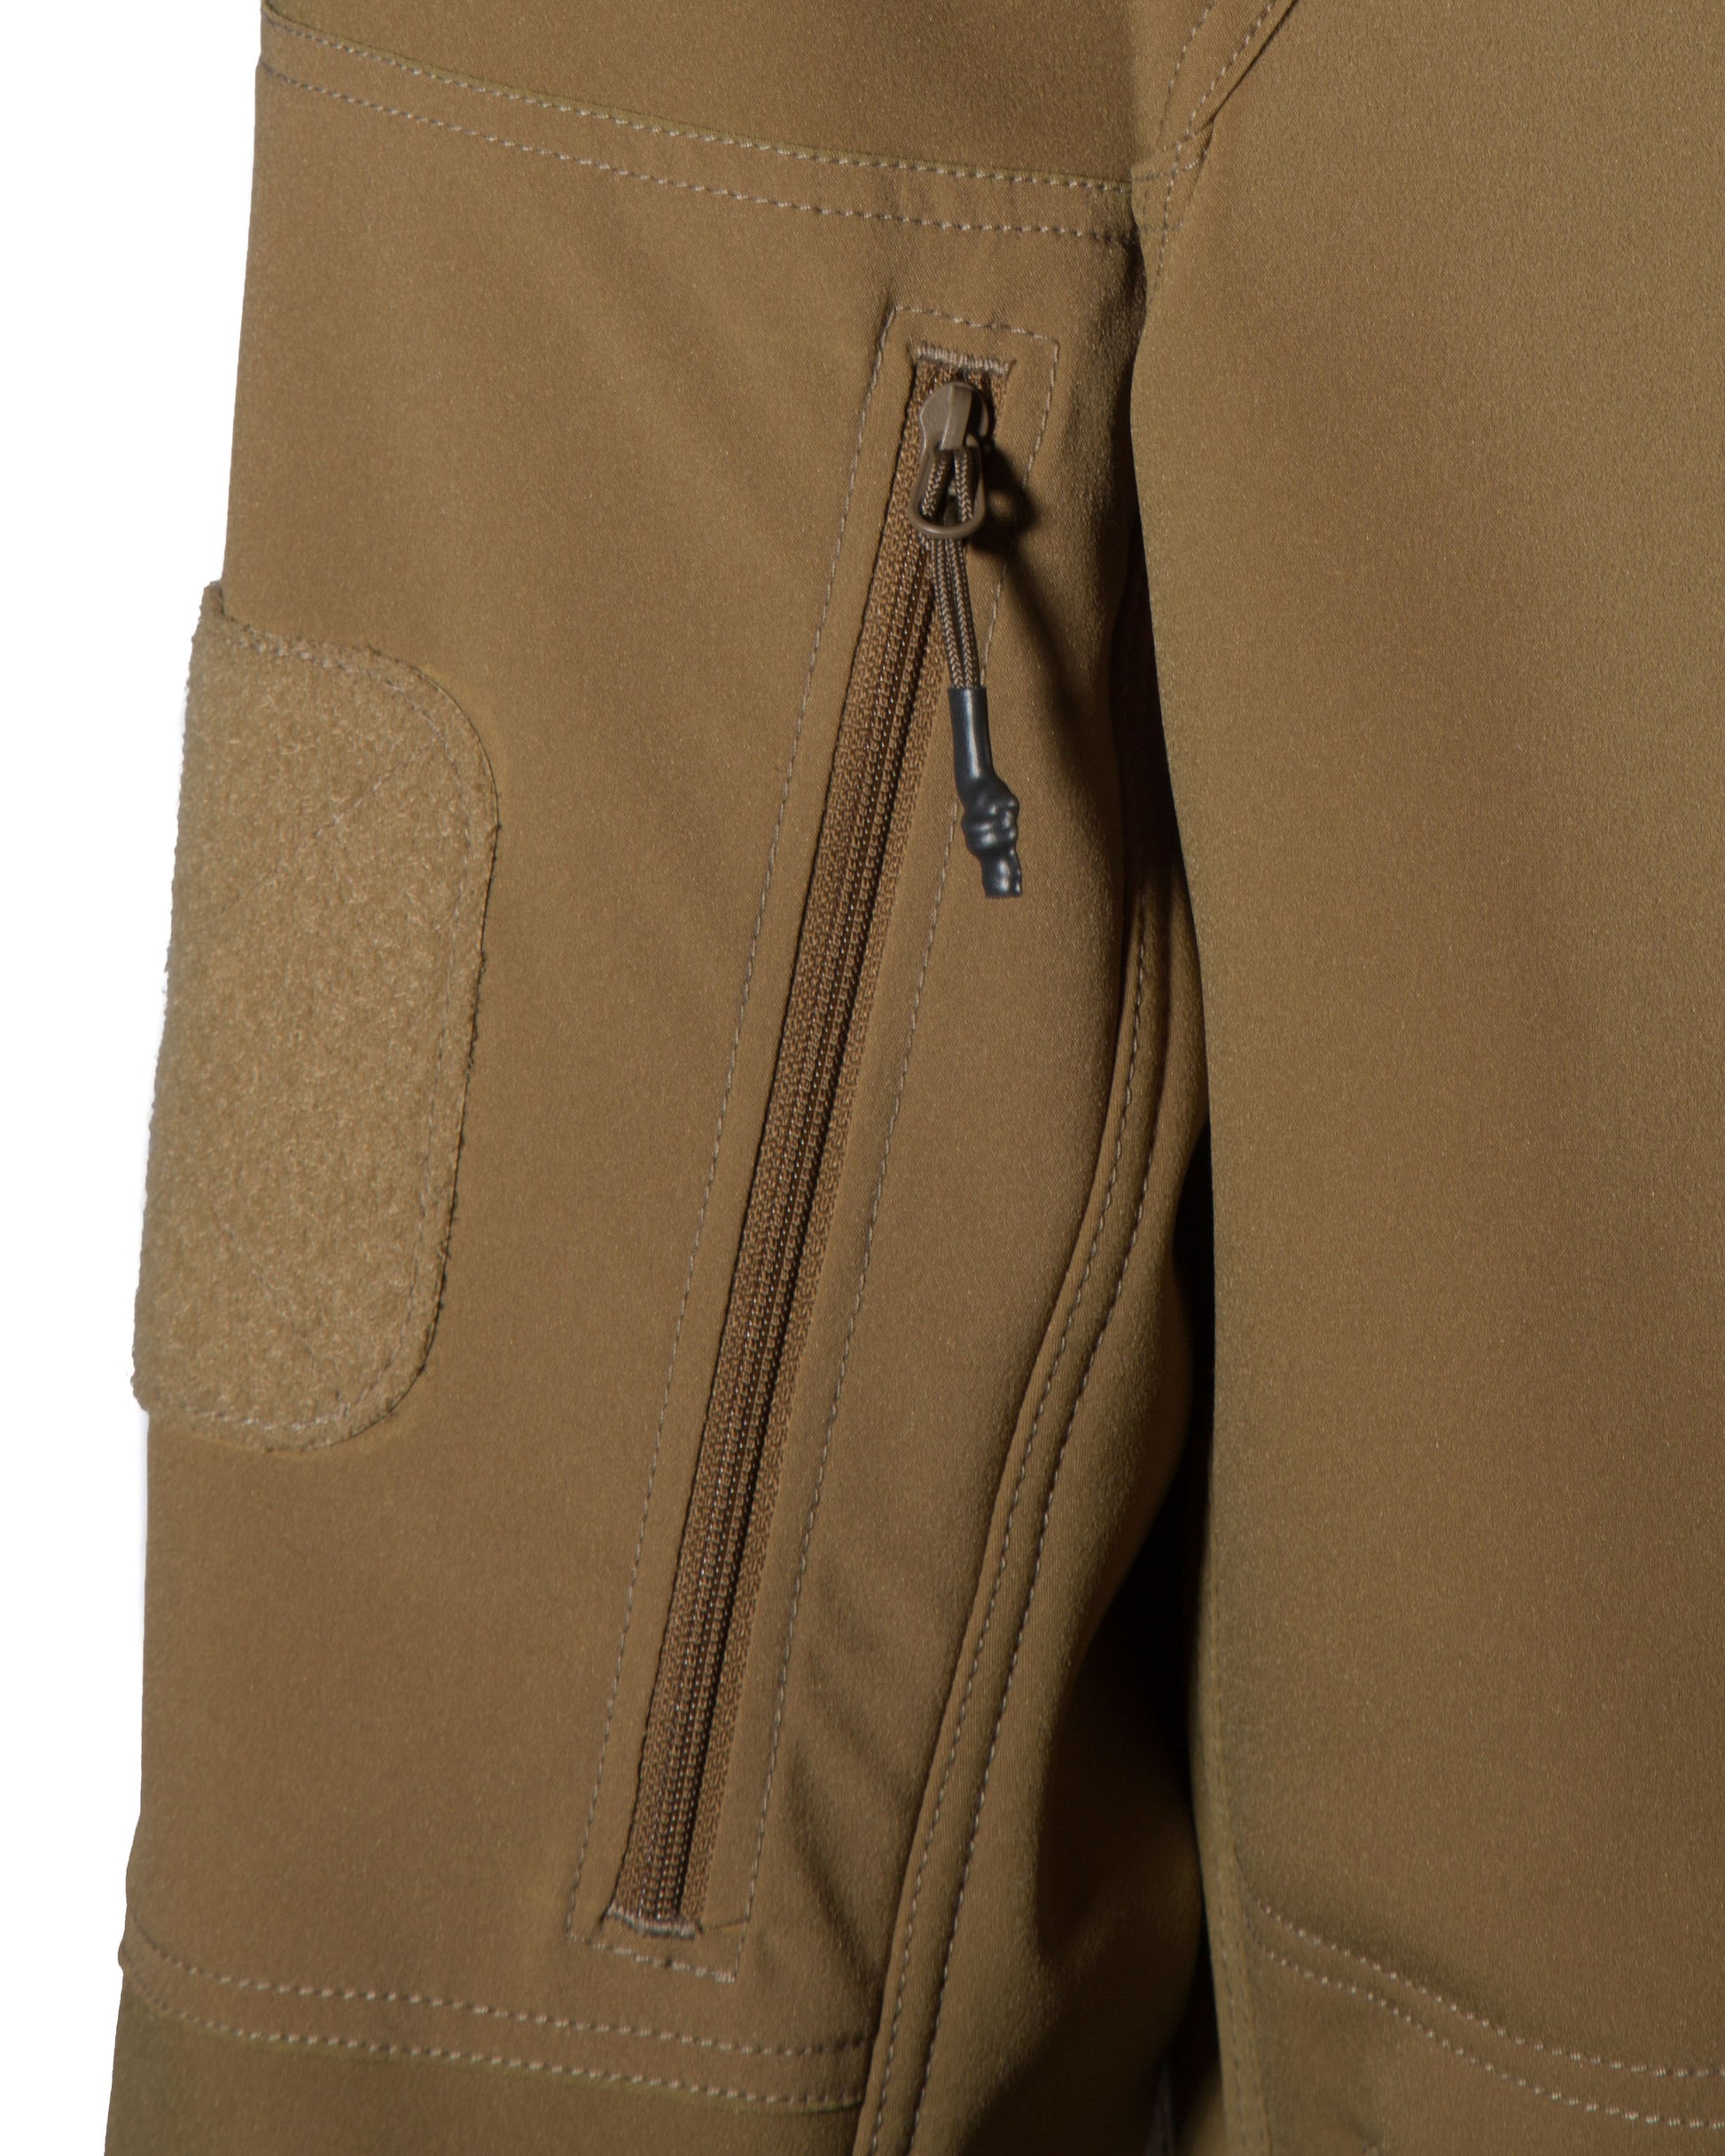 Beyond Clothing L5 PCU Soft Shell Pants, Coyote Brown - Venture Surplus